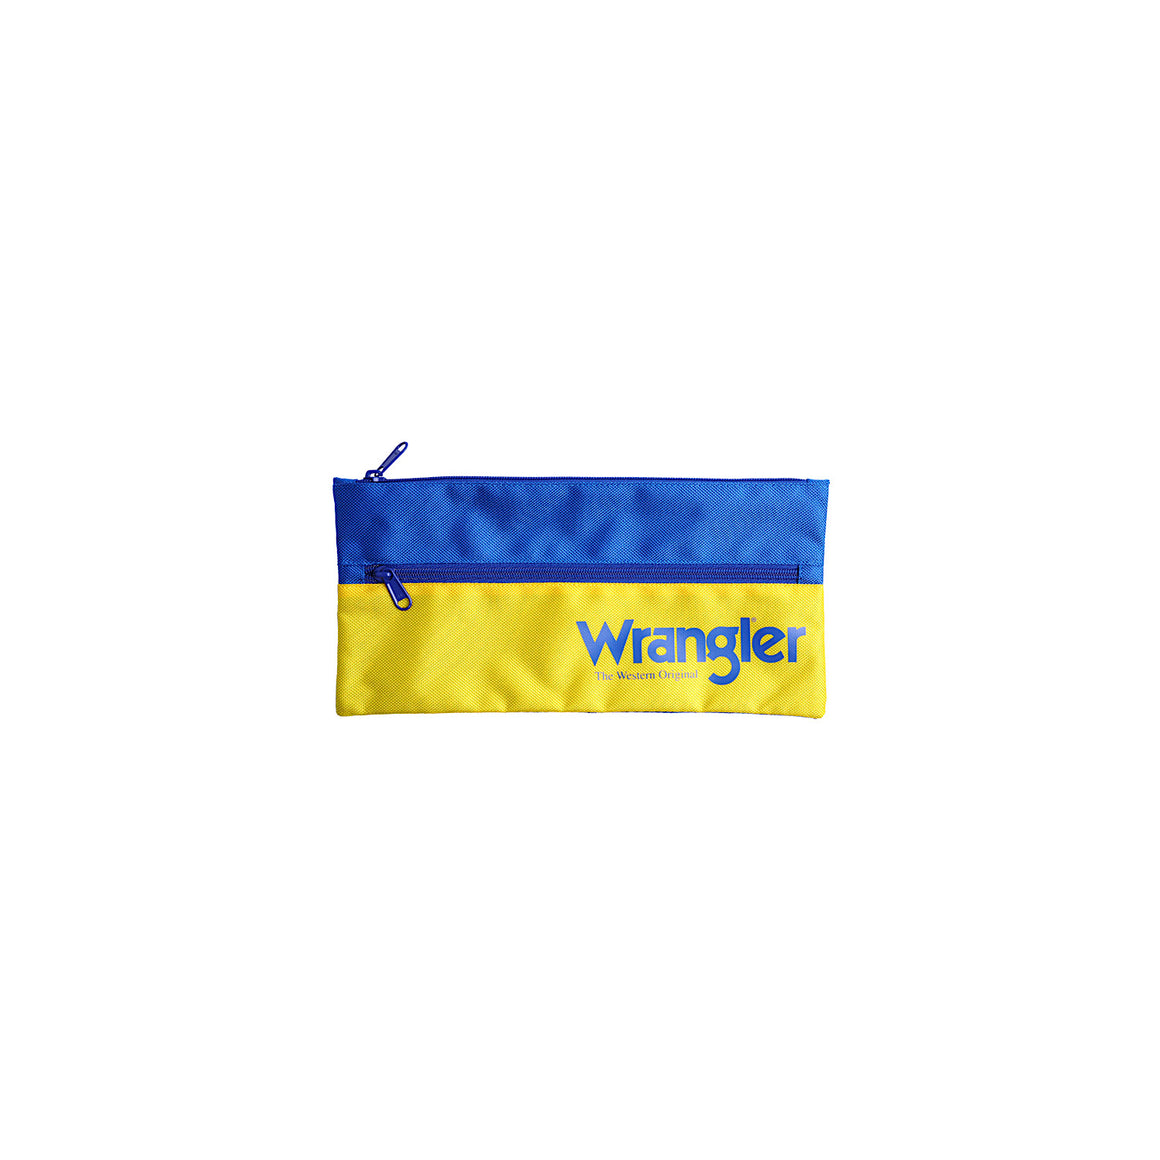 Wrangler Iconic Pencil Case Blue/Yellow